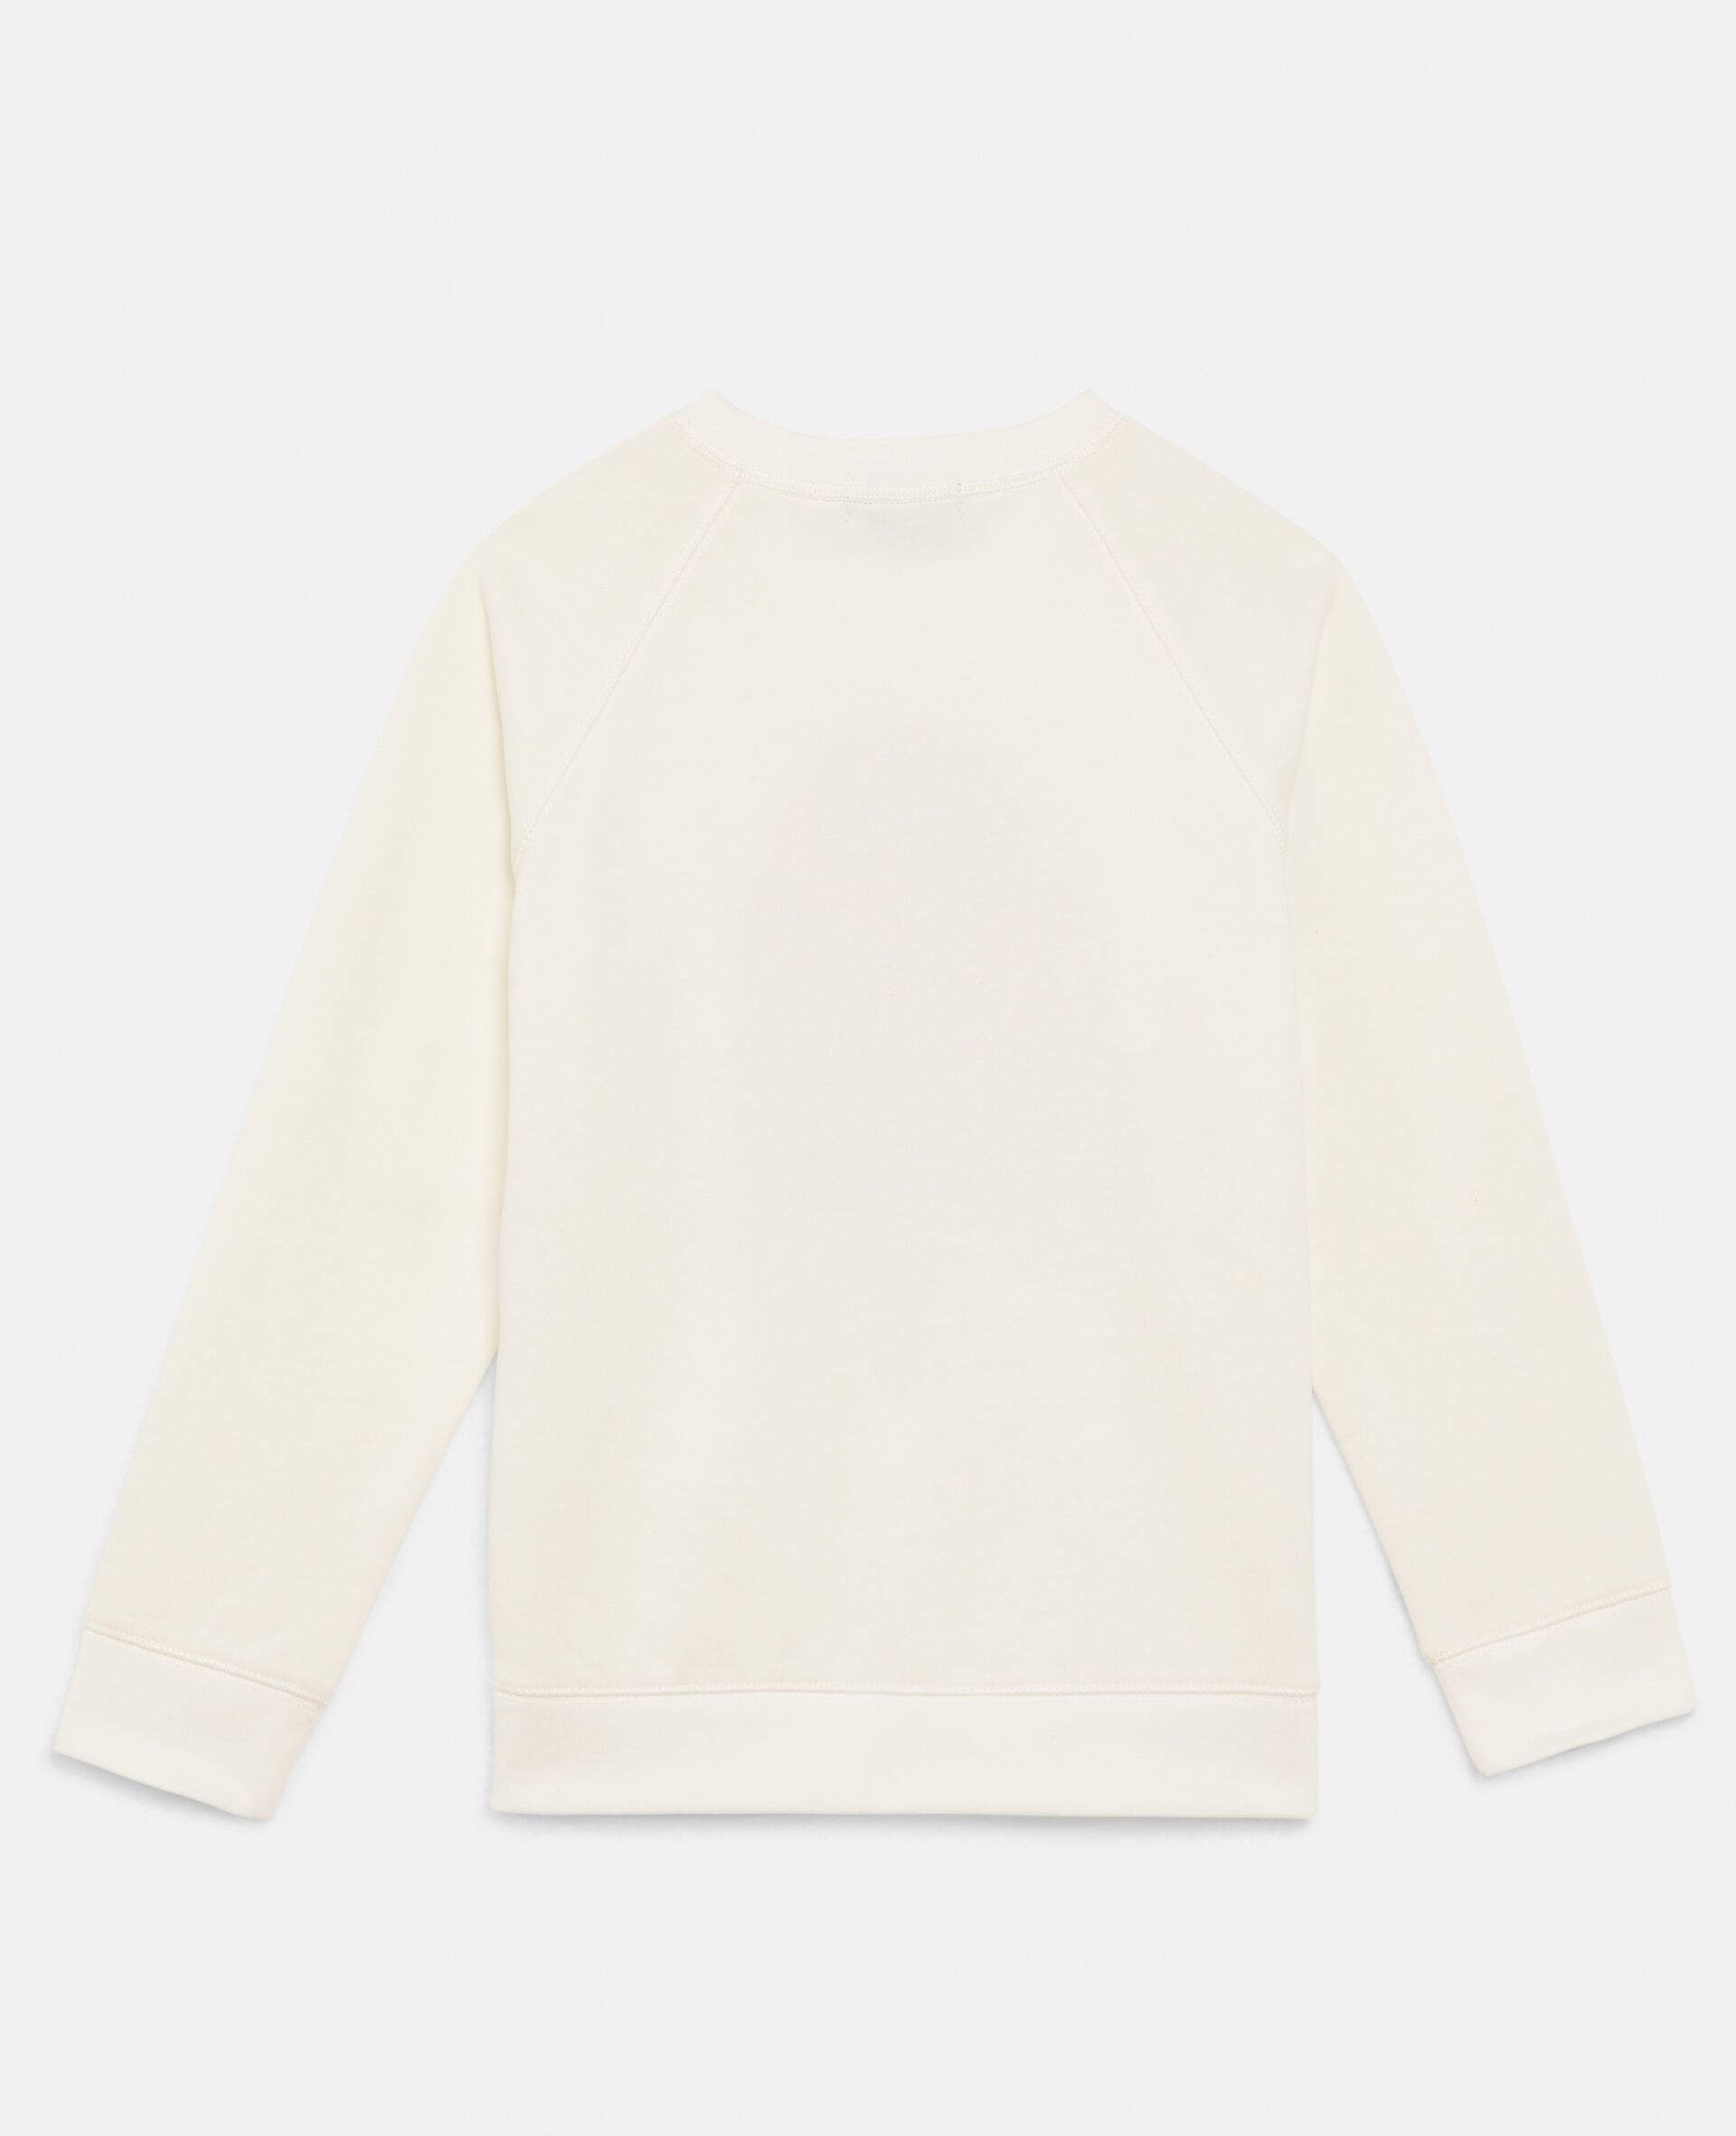 Popsicle Print Fleece Sweatshirt-White-large image number 2